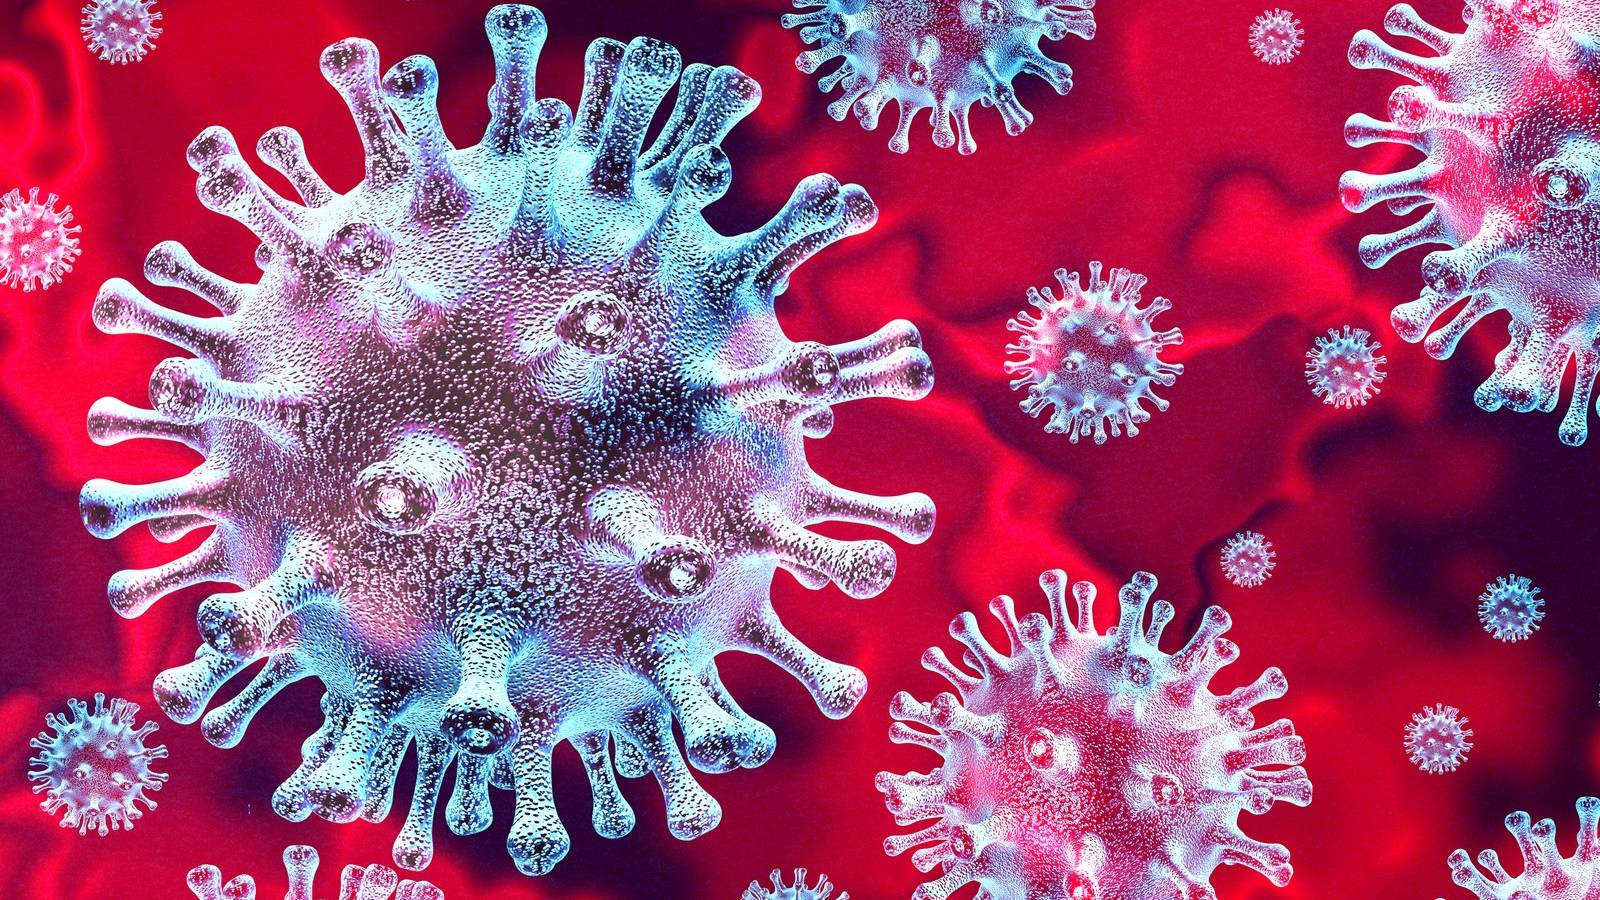 Coronavirus Romania Cazuri Vindecari 27 Mai